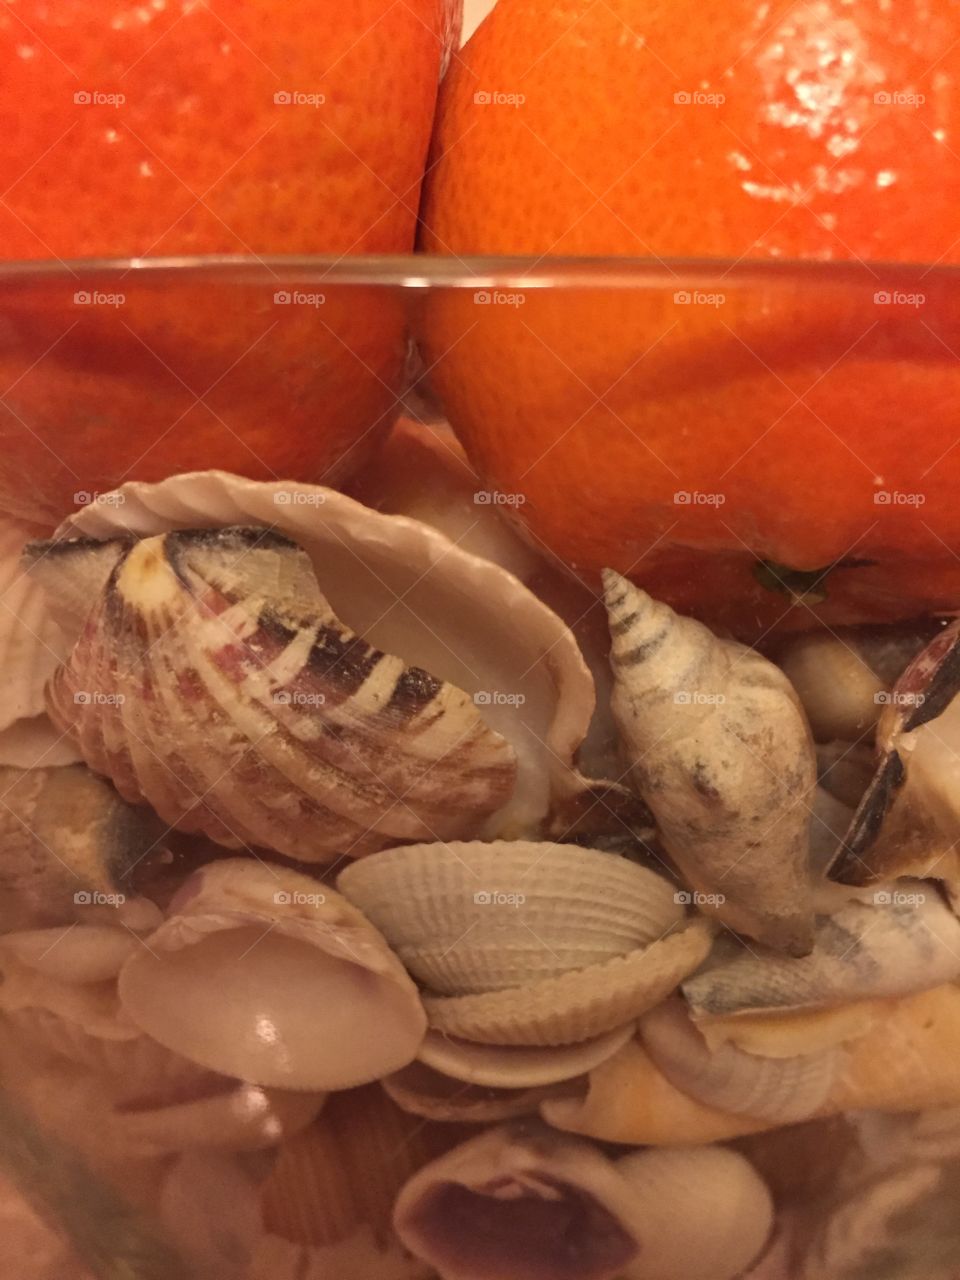 Oranges & shells